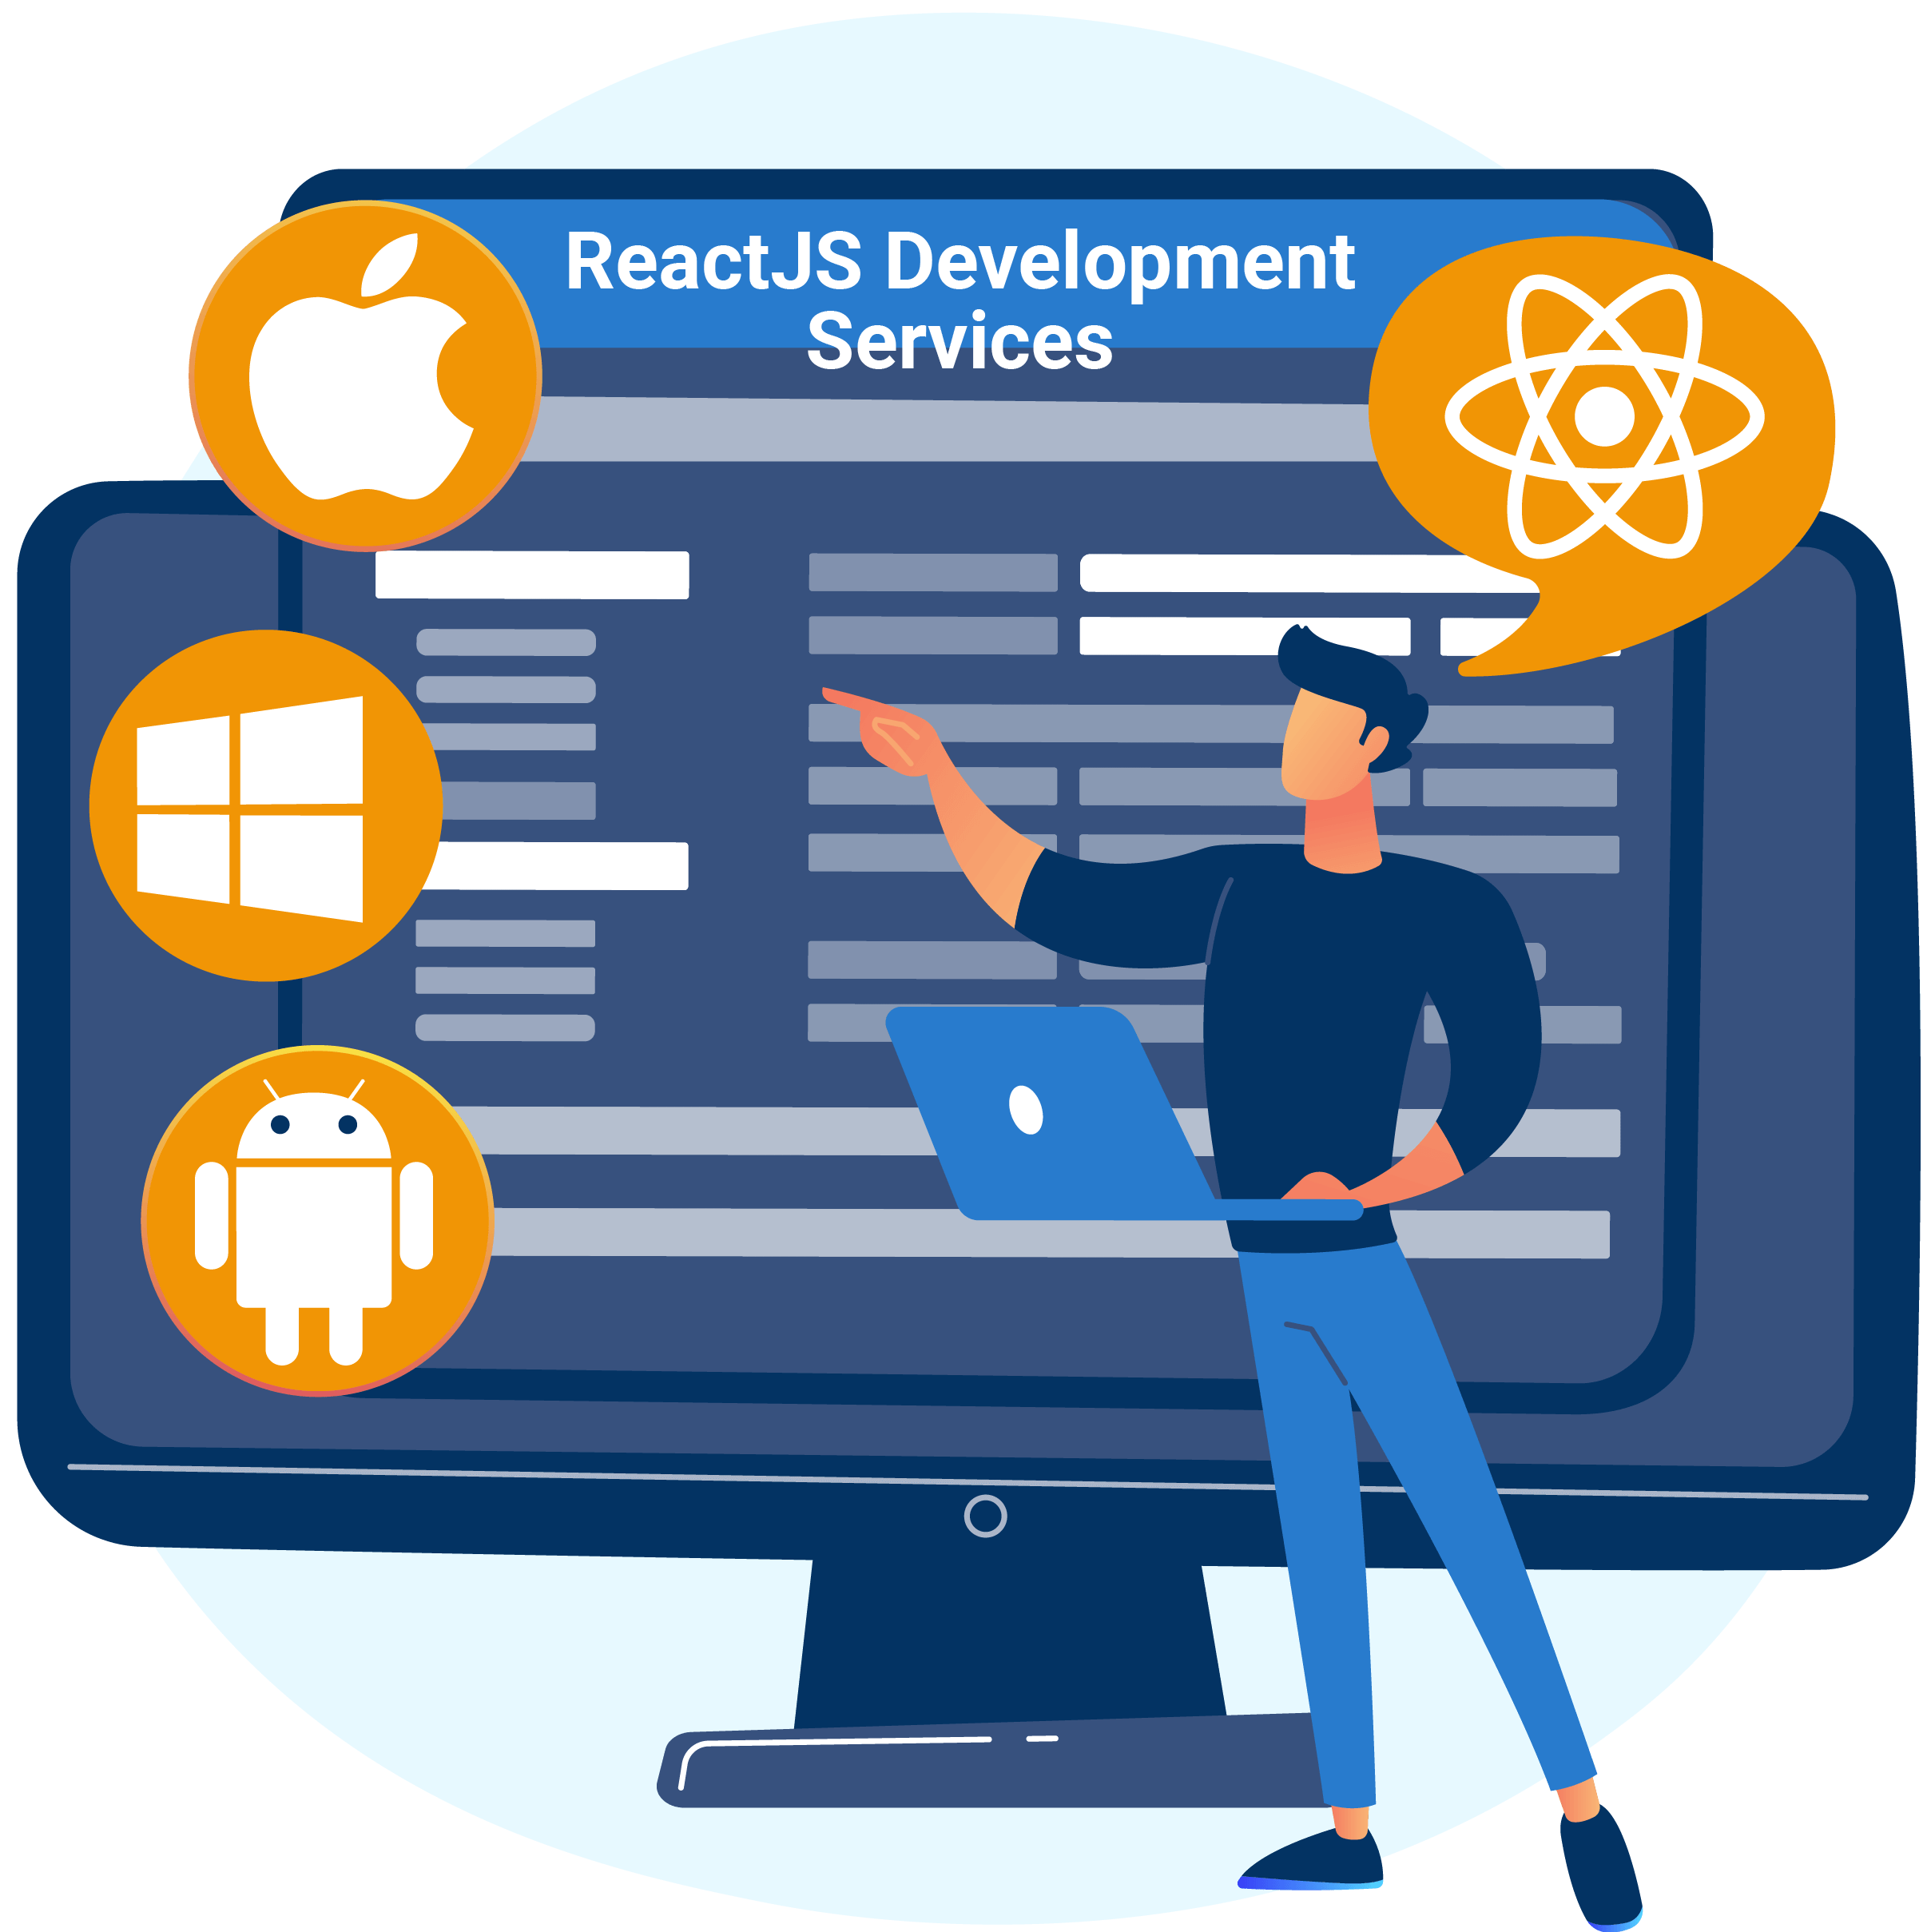 ReactJS development services